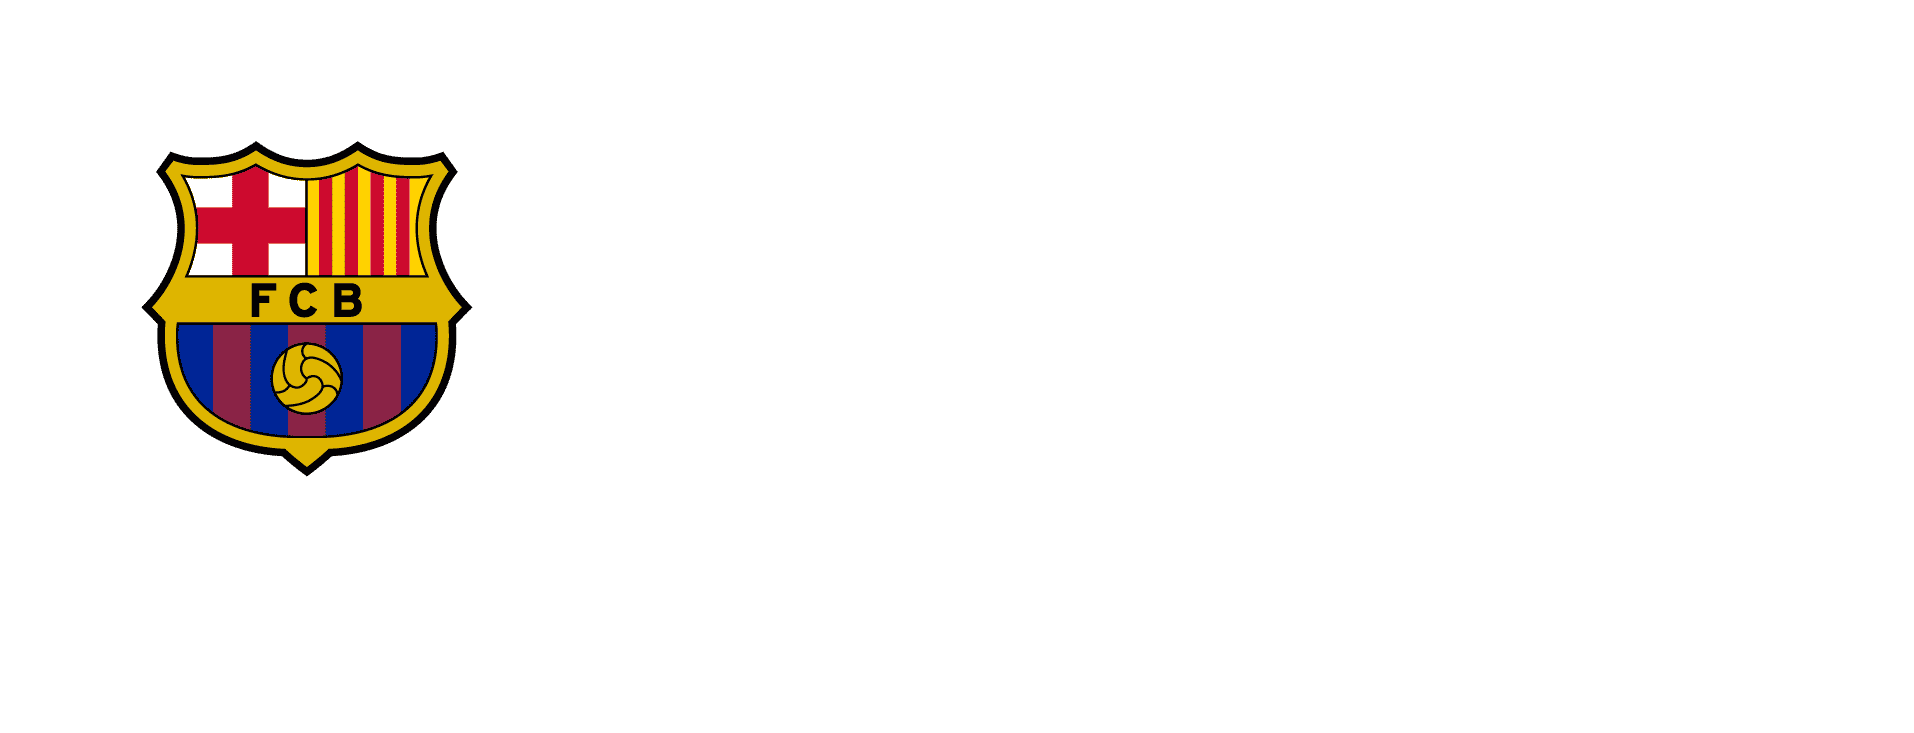 BARÇA Innovation hub Universitas H RGB-01